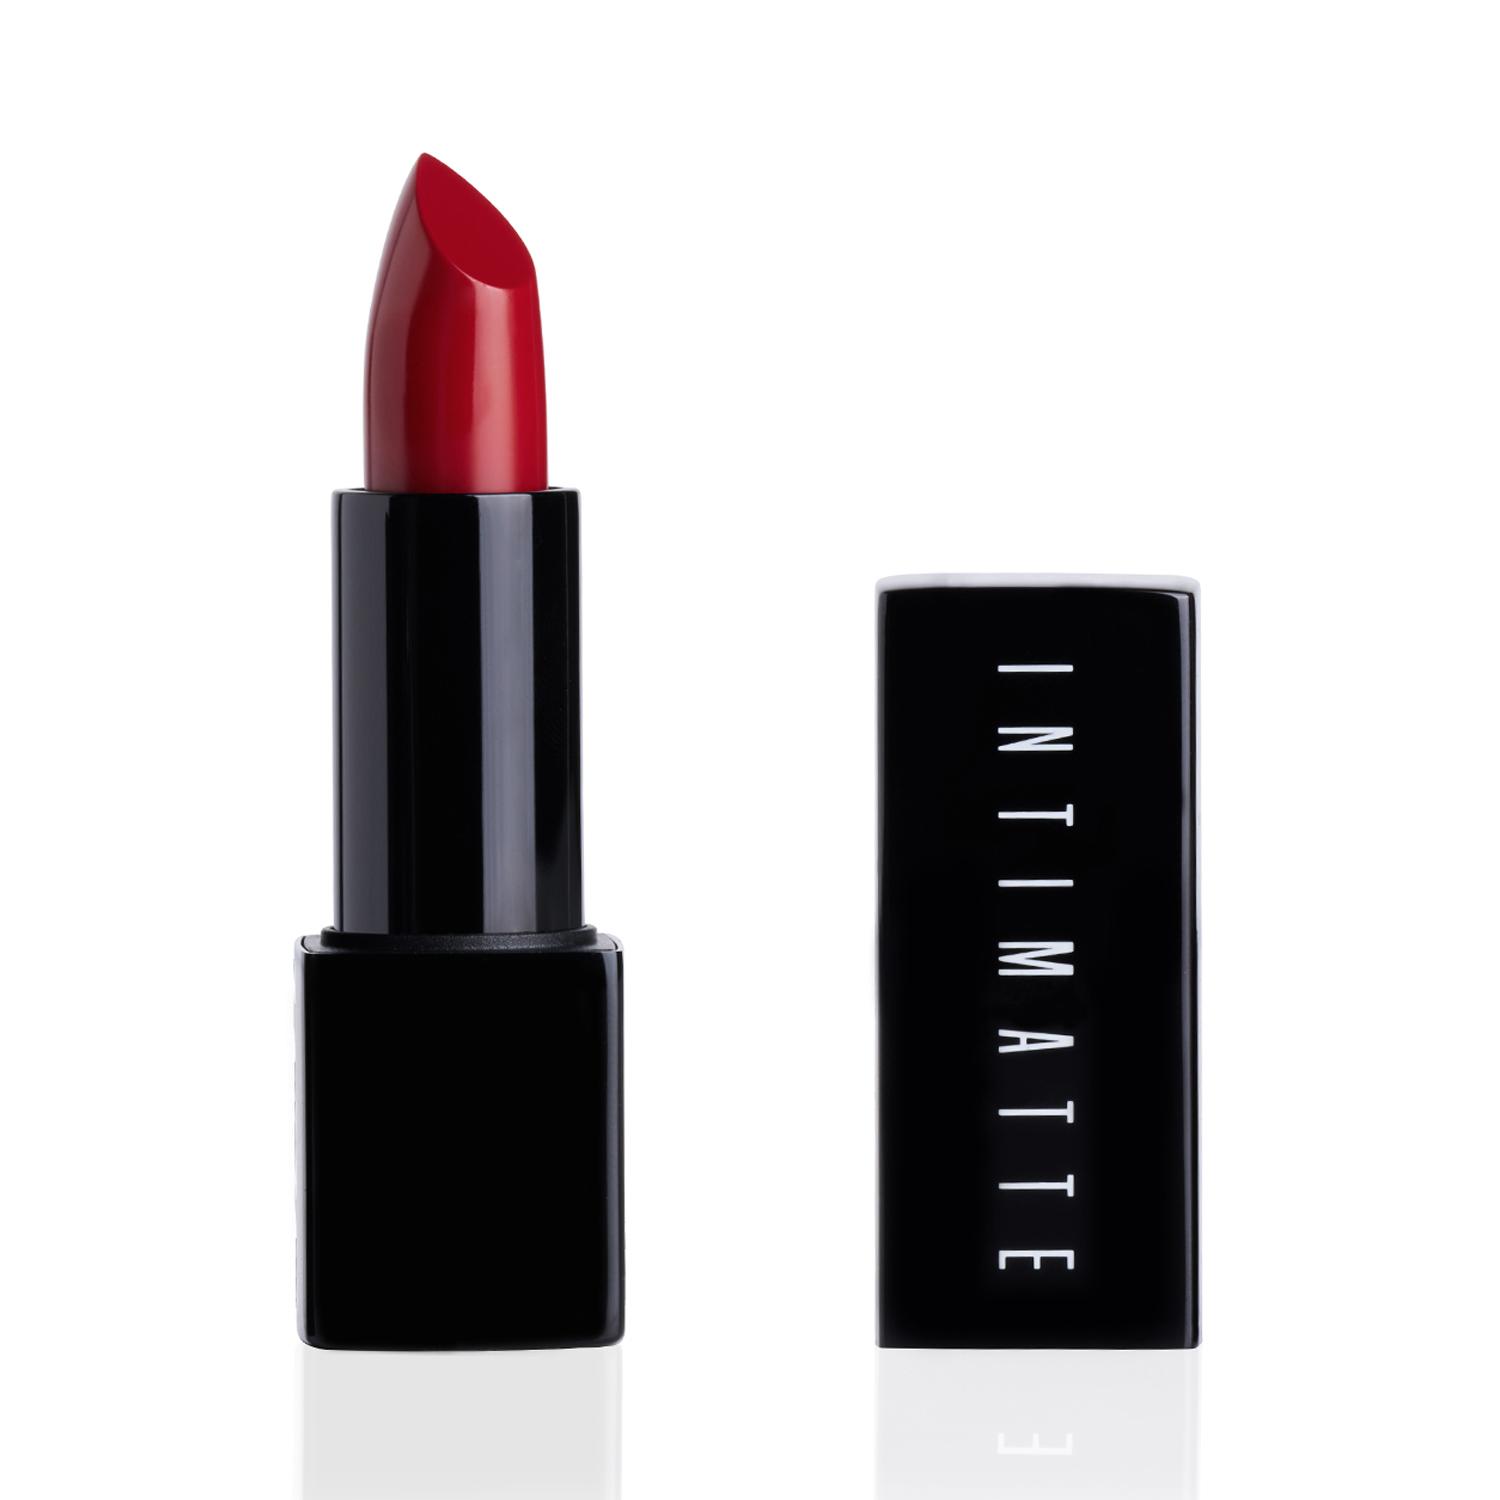 PAC | PAC Intimatte Lipstick - Royale (4g)